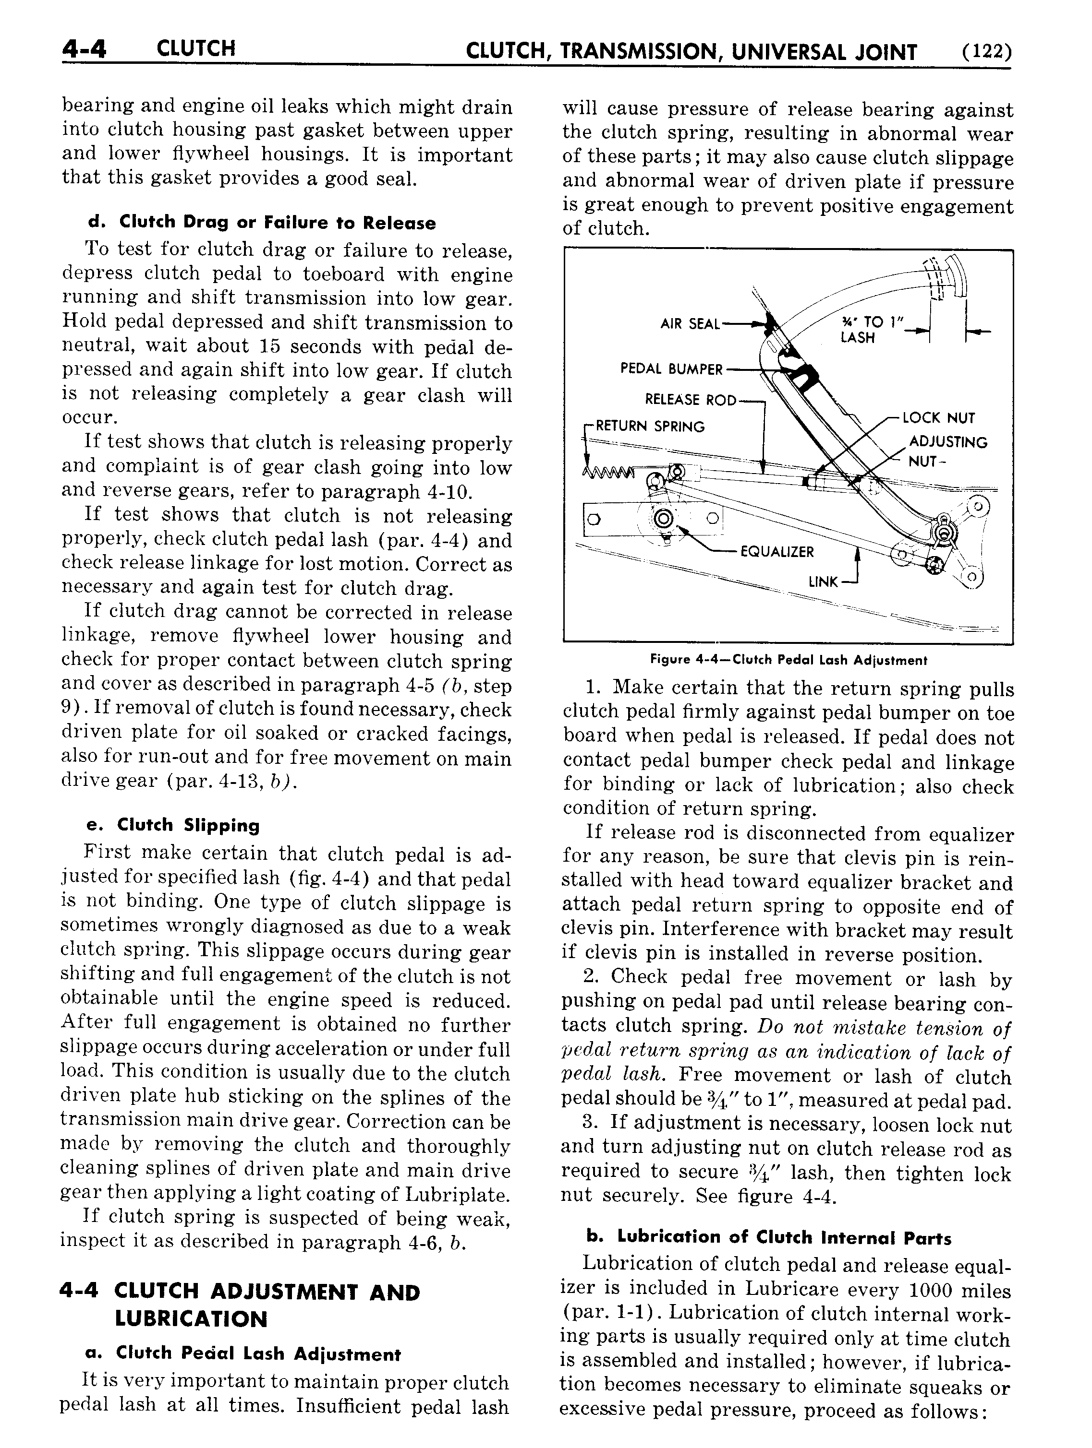 n_05 1951 Buick Shop Manual - Transmission-004-004.jpg